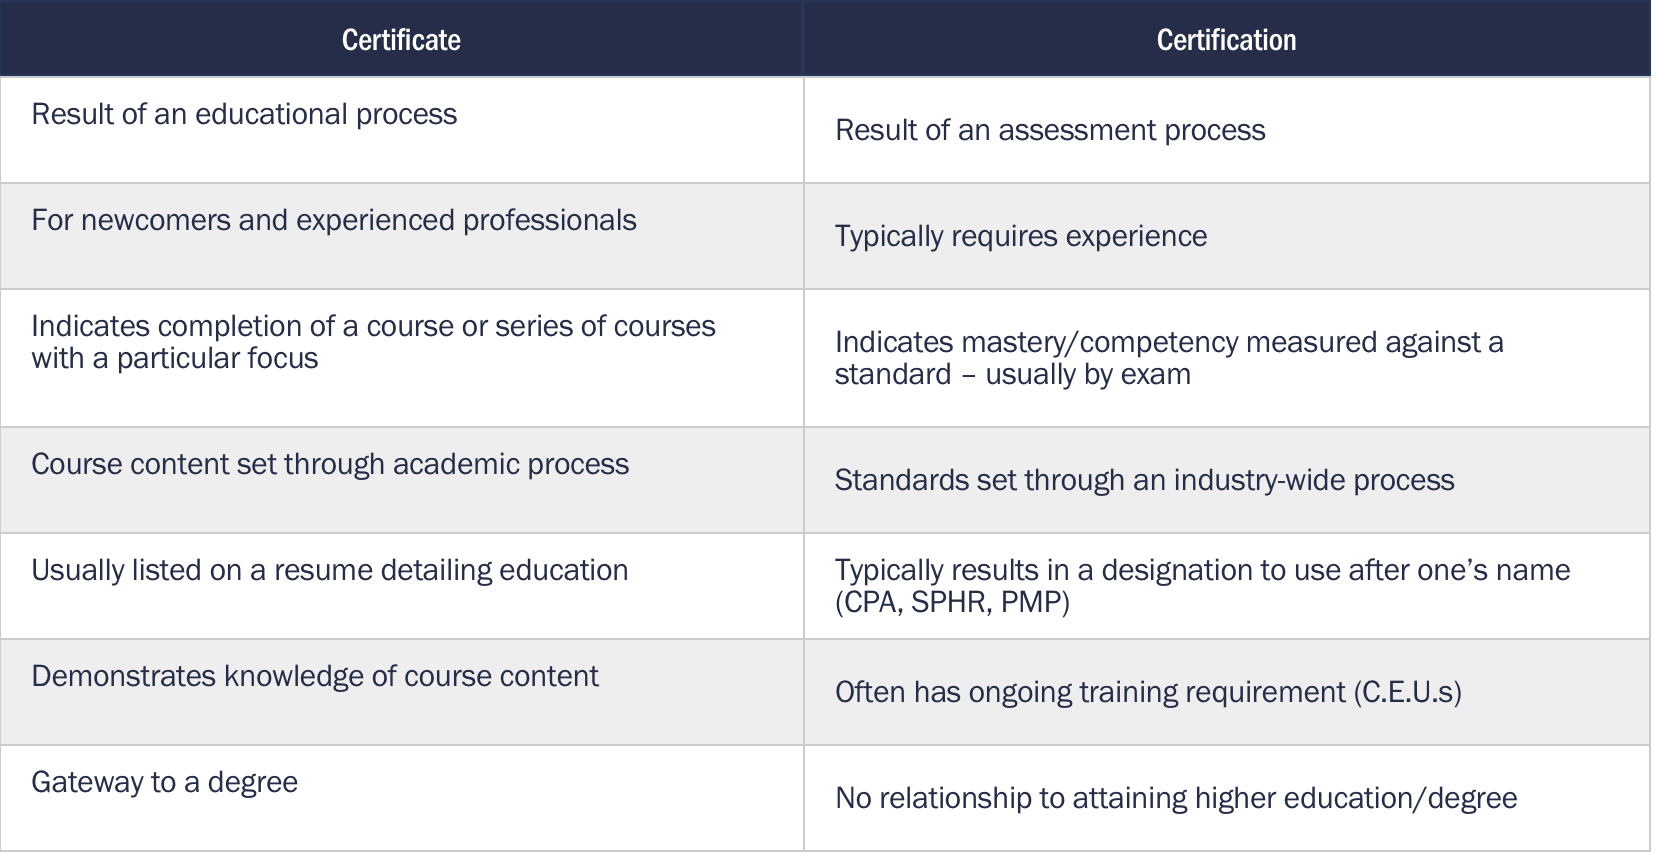 Certificate vs Certification